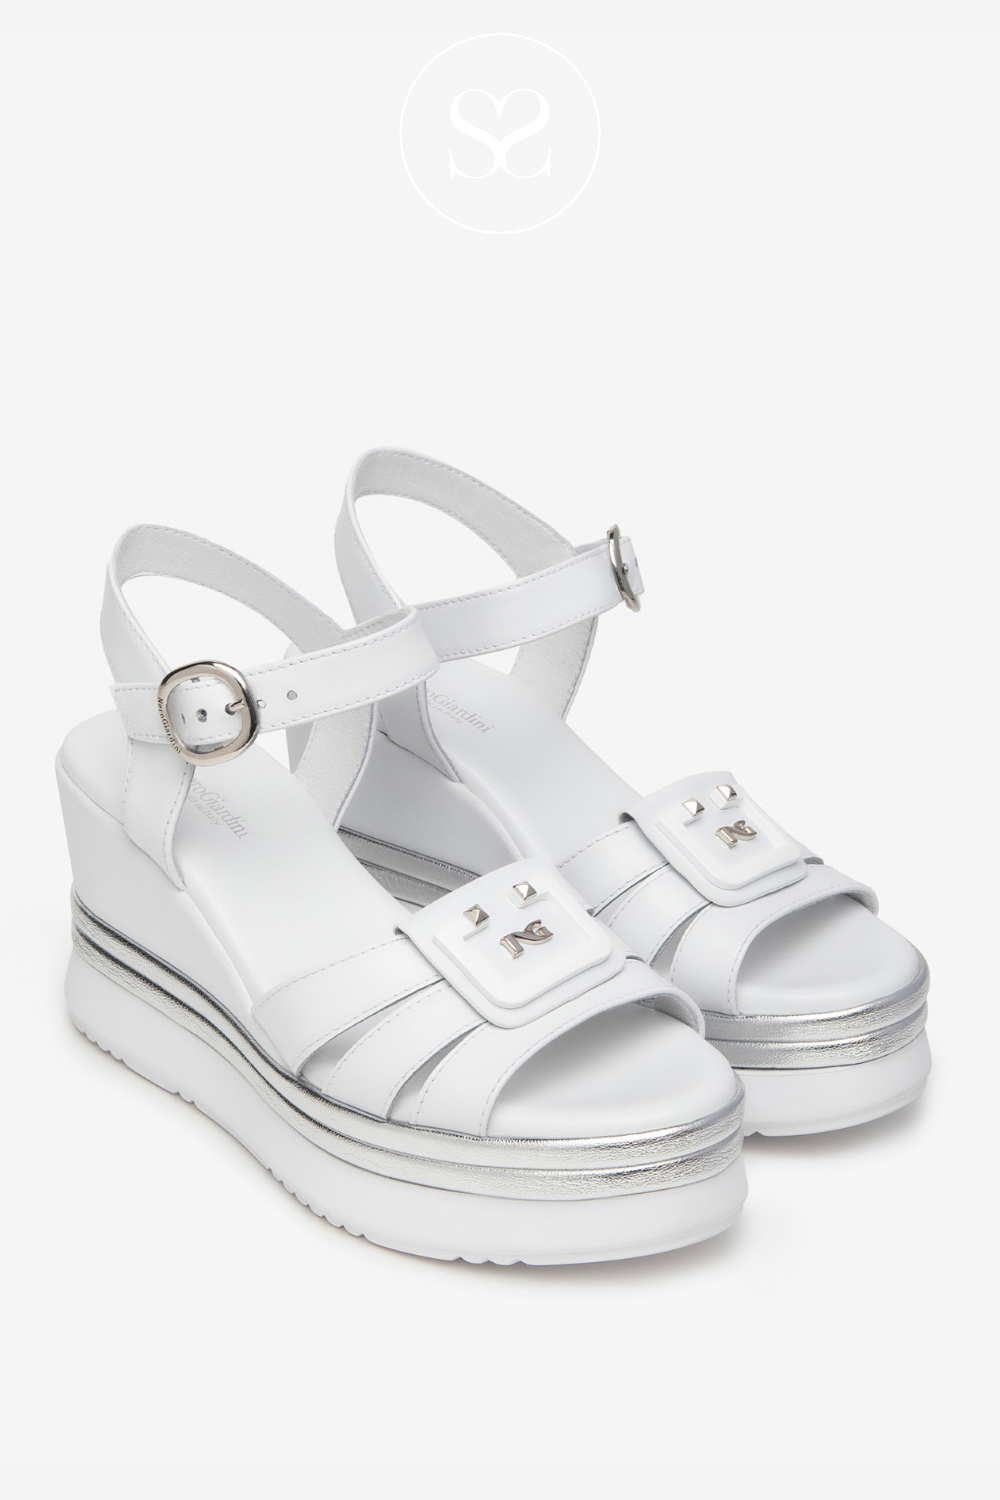 Nero Giardini e410570d wedge sandals for women in white leather